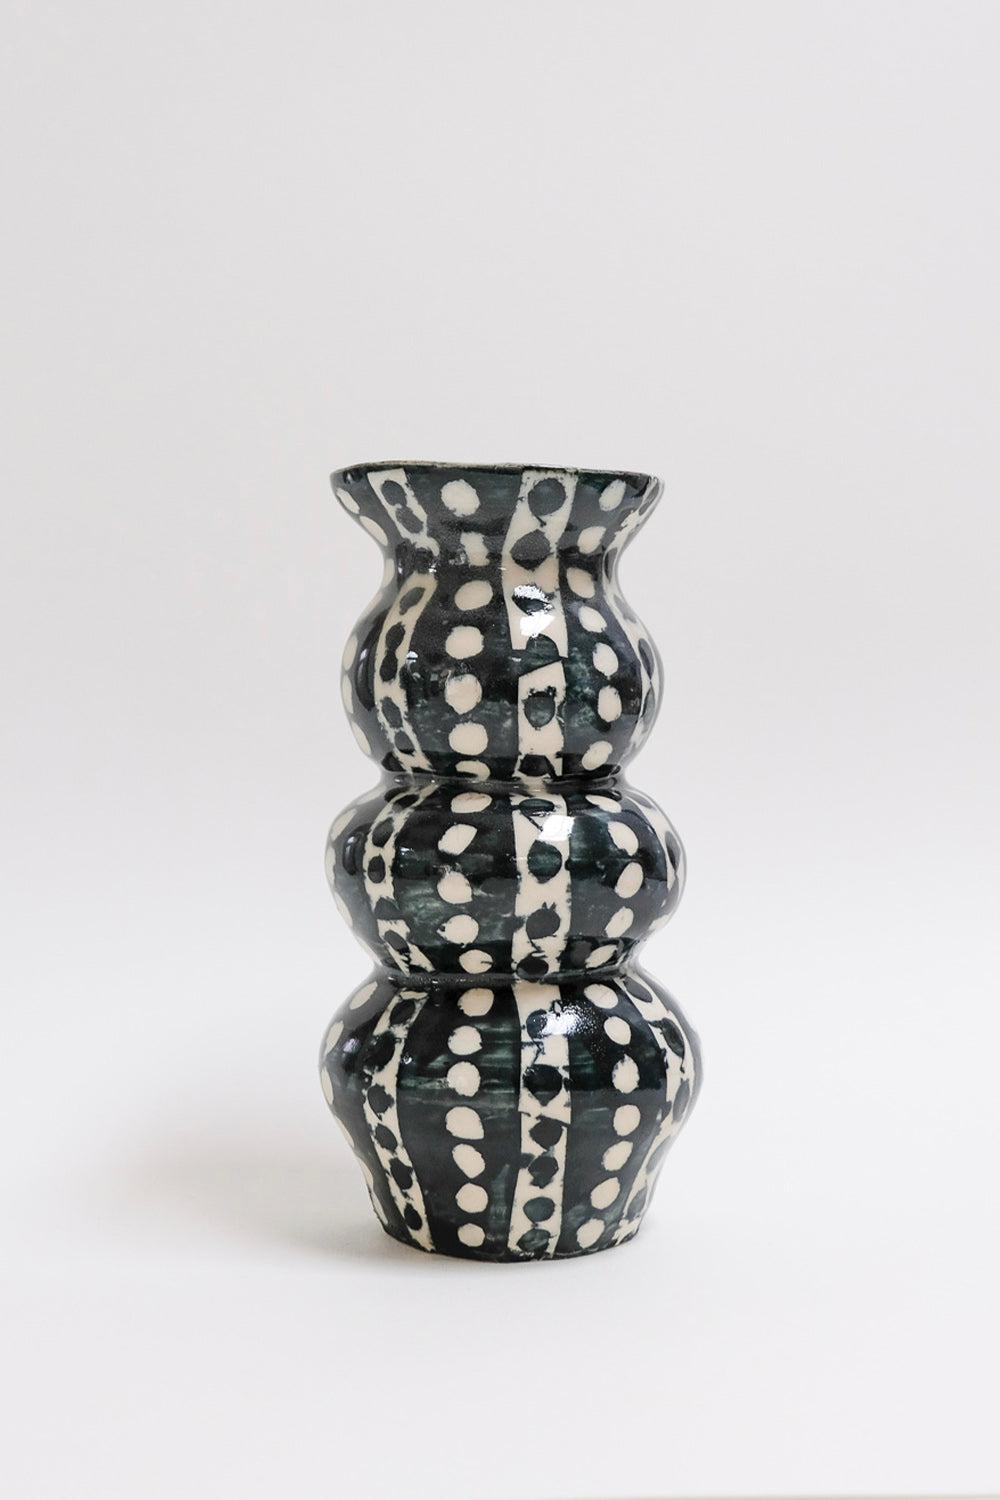 Mur Vessel 8 - contemporary ceramic polka dot art vase, wheel thrown hand built - Contemporary Sculpture by Misbah Ahmed